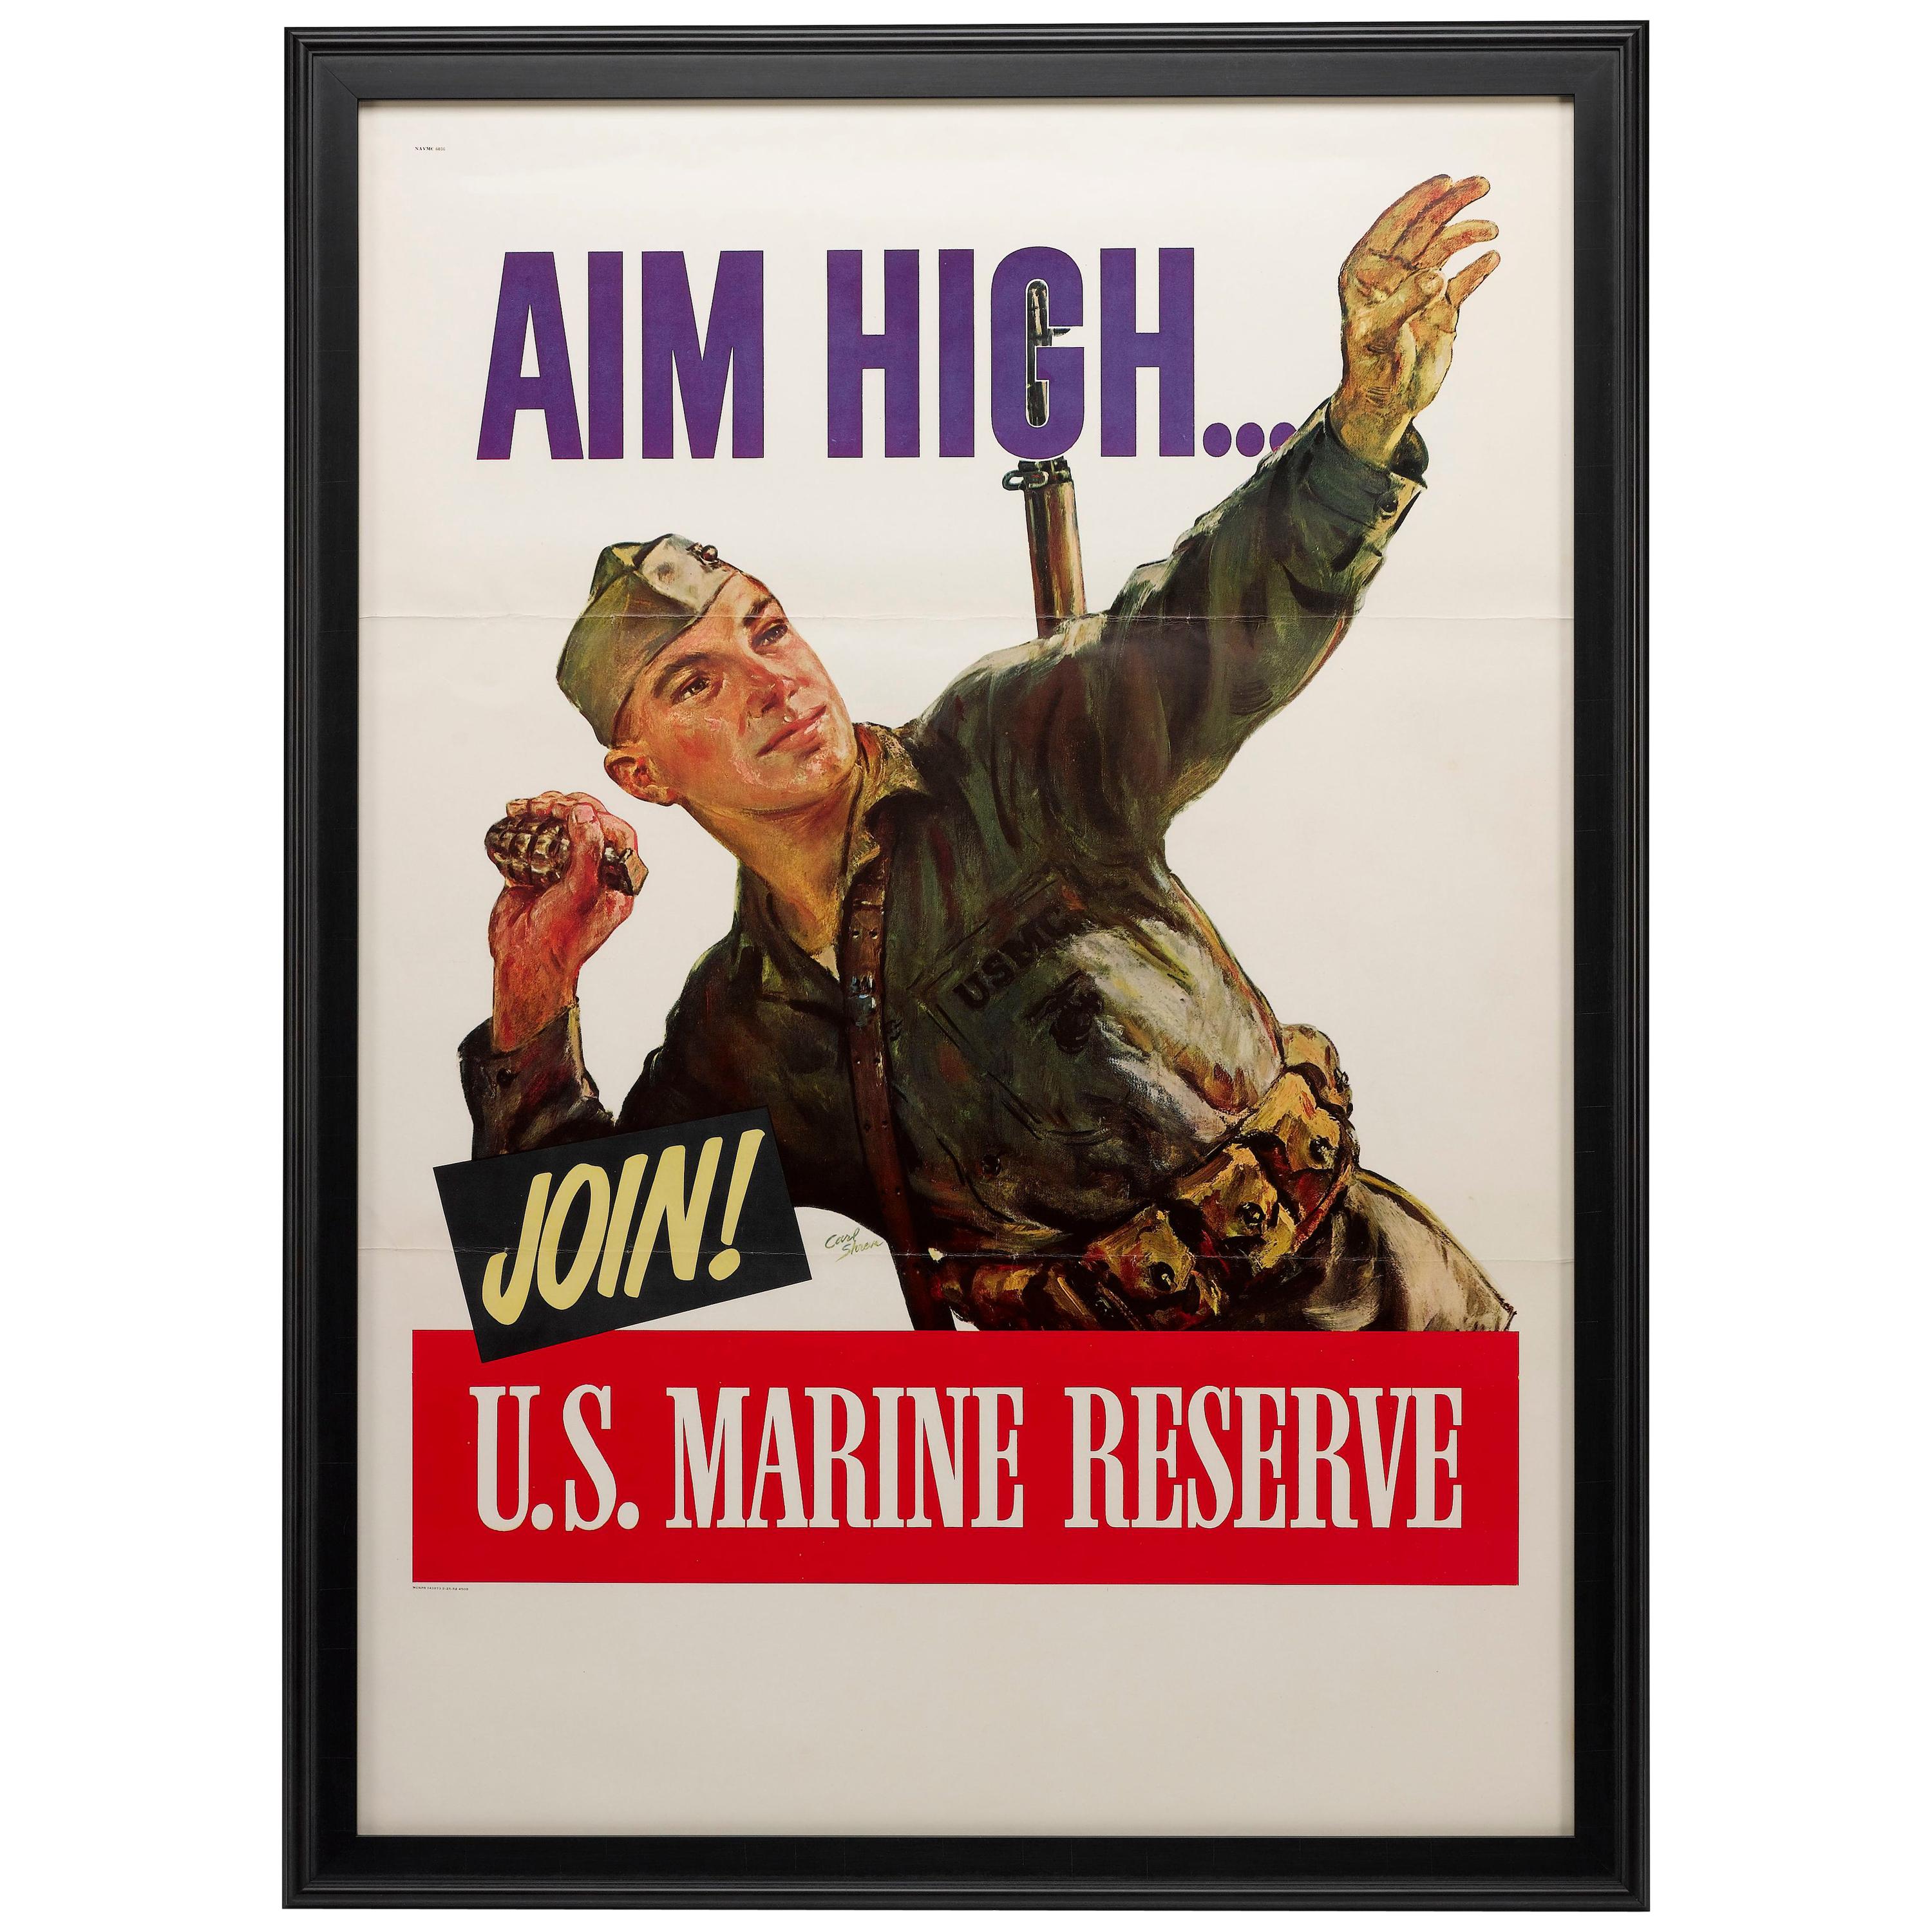 U.S. Marine Reserve WWII Poster, by Carl Shreve